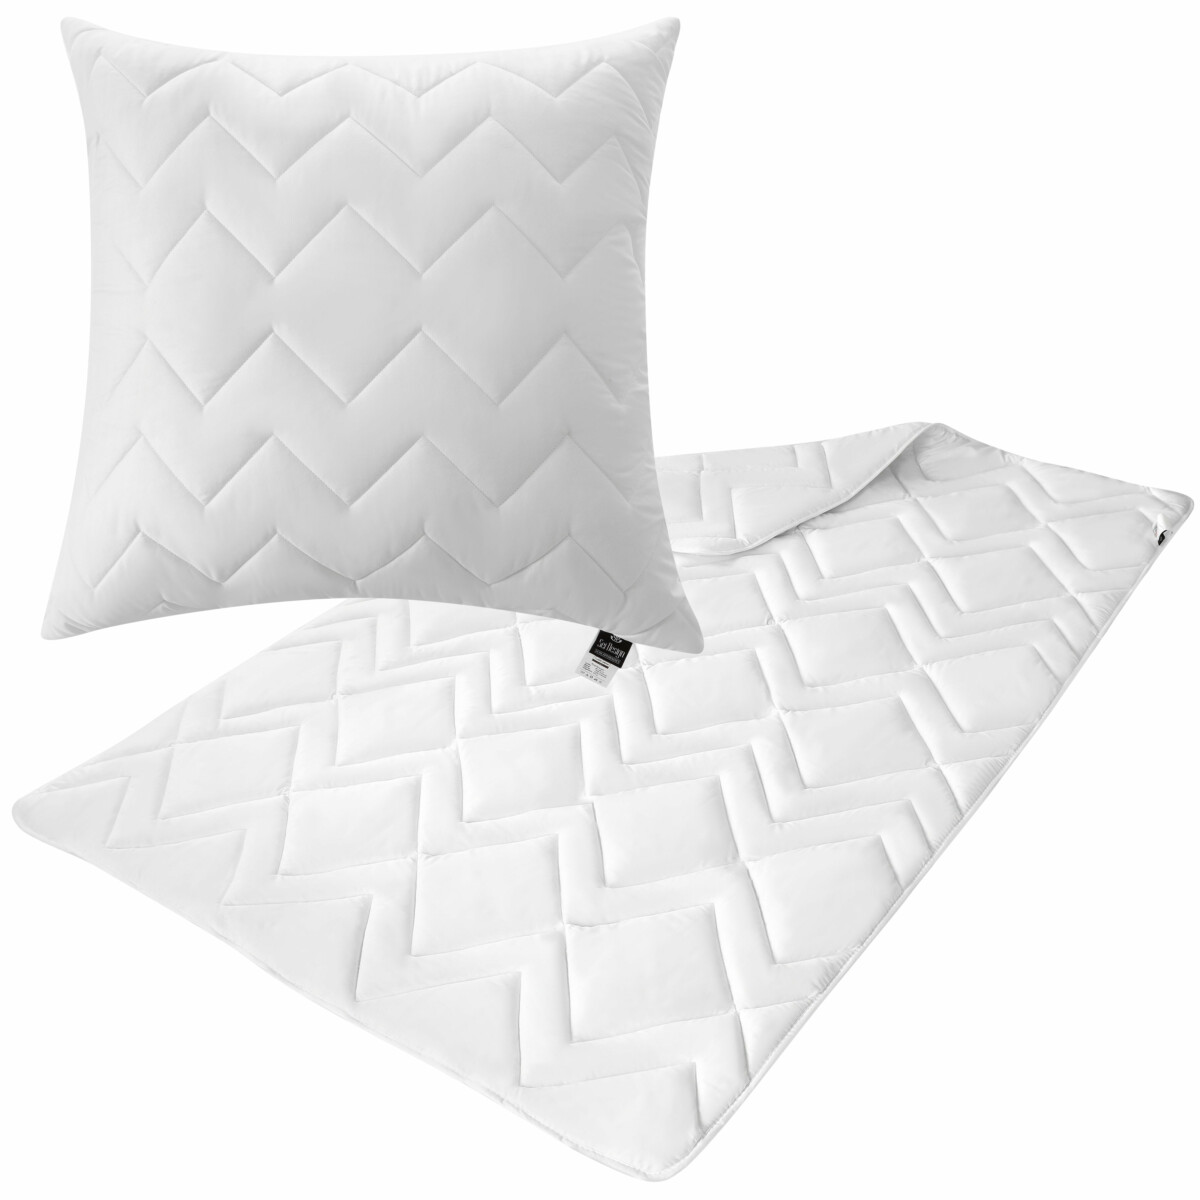 Hochwertige Bettdecken günstig bestellen - Sei Design, 59,90 €